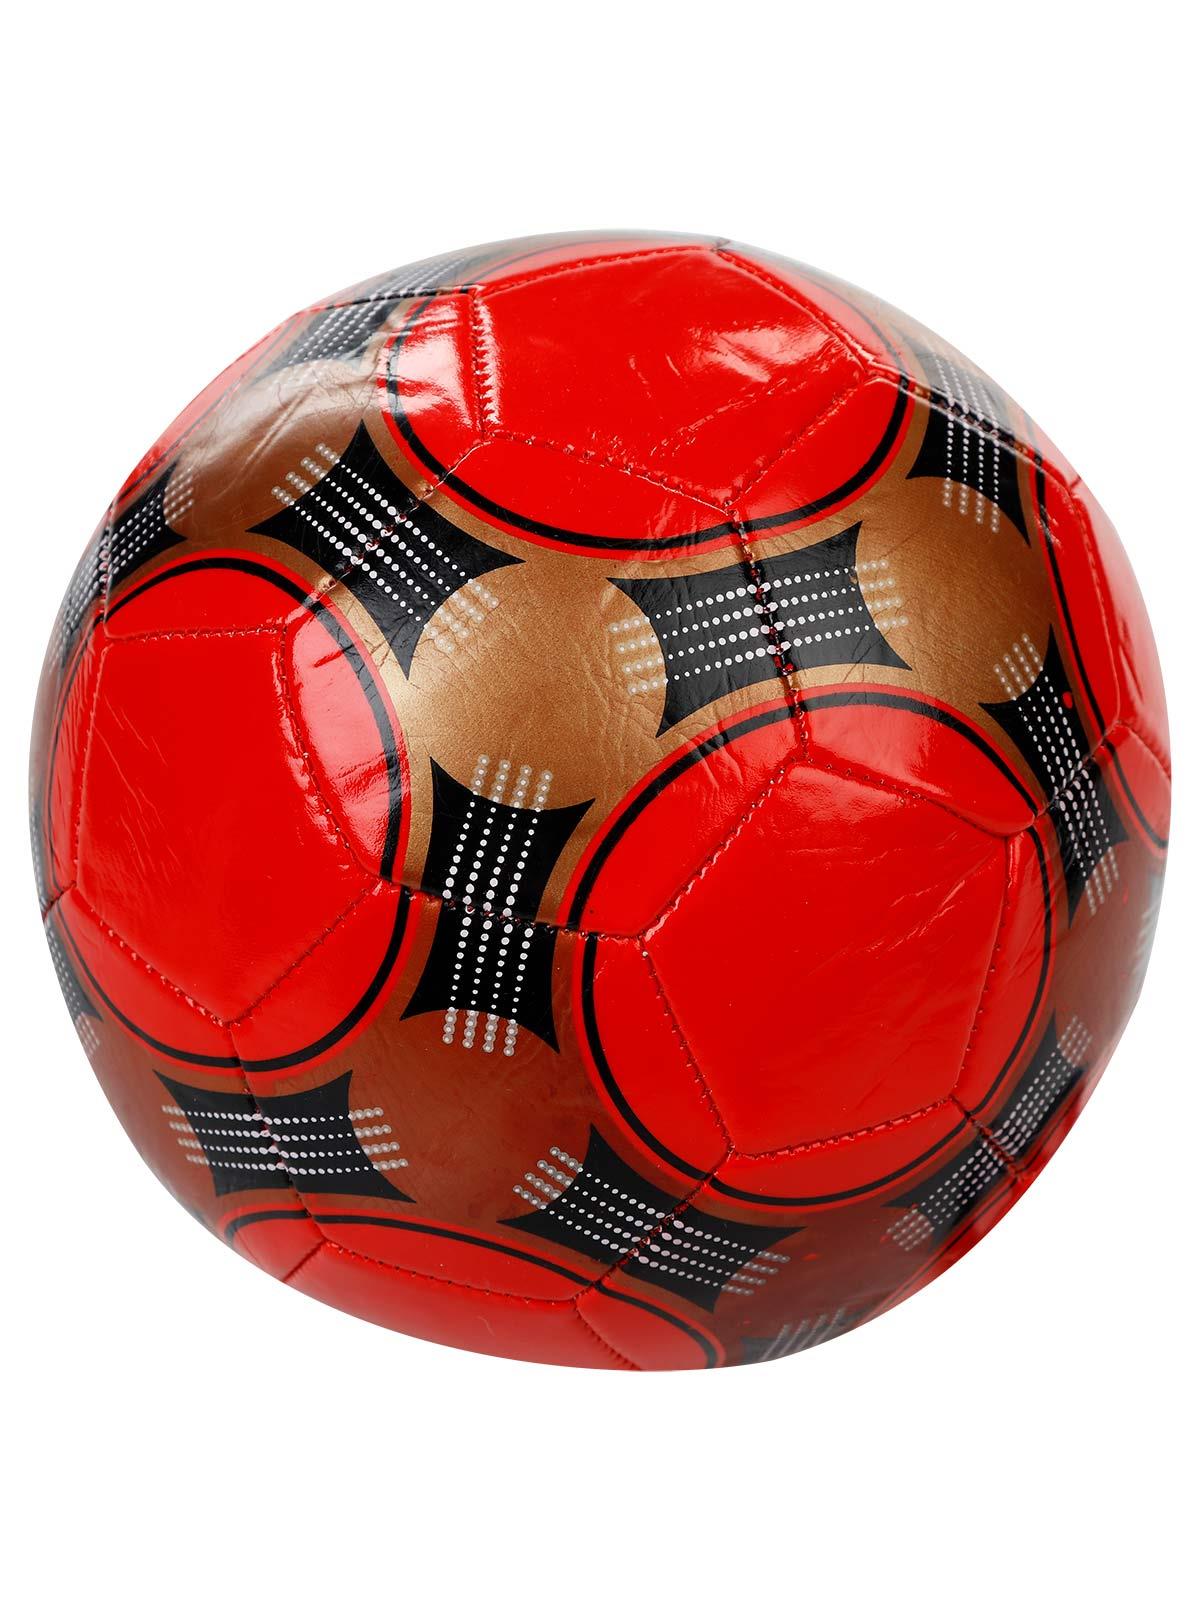   5 Numara Futbol Topu